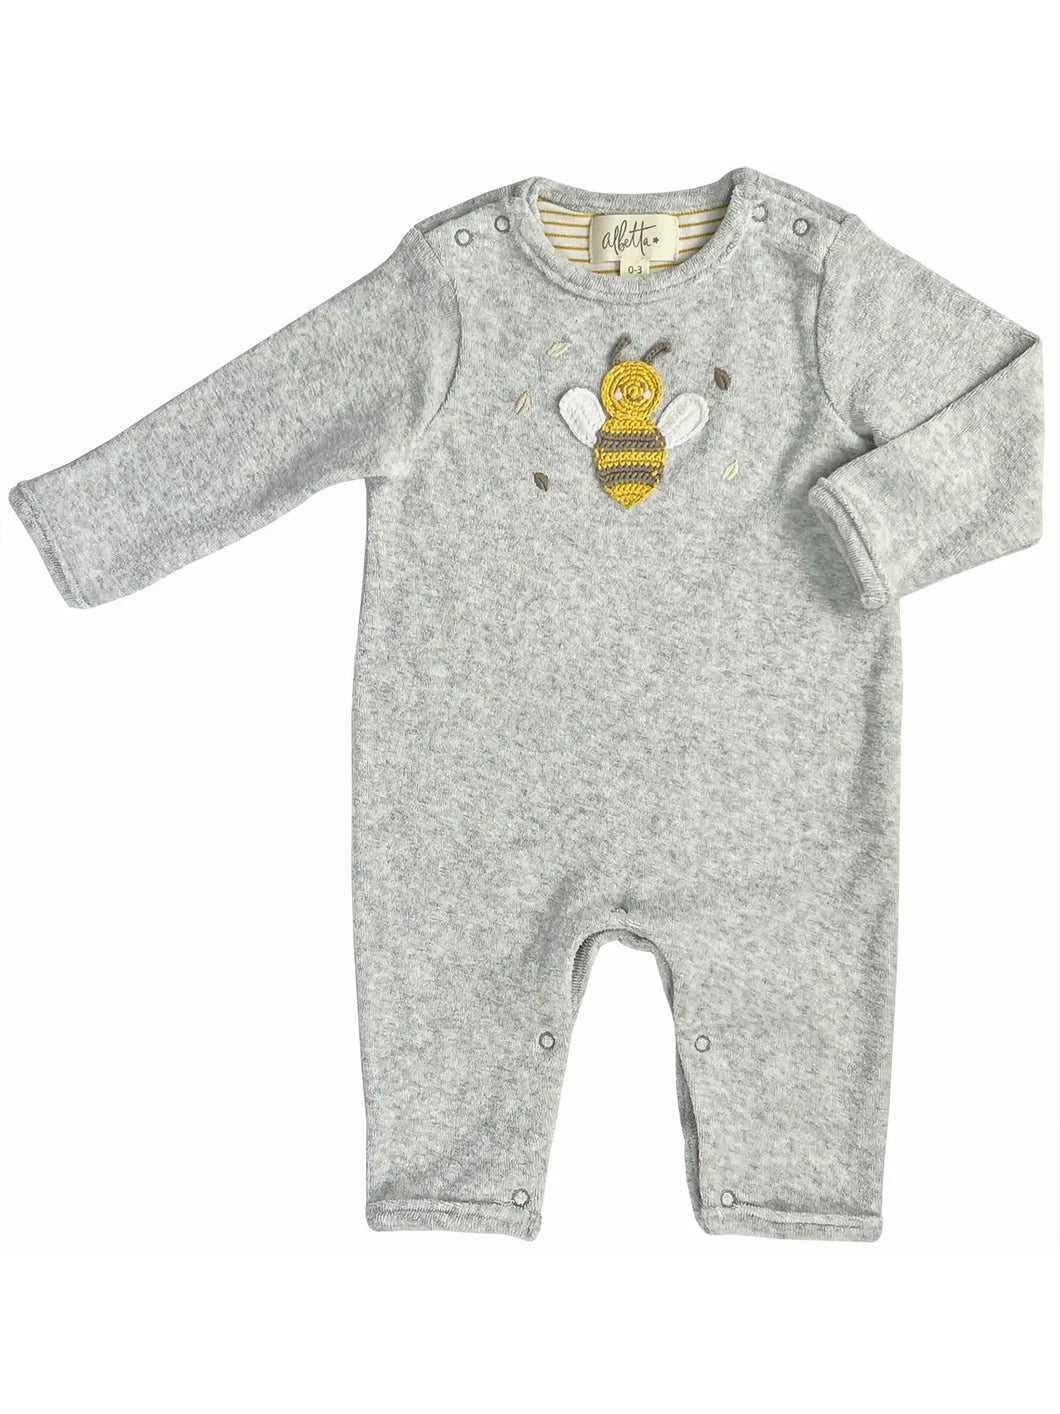 Crochet Bee applique Grey Baby Romper by Albetta Long Sleeve